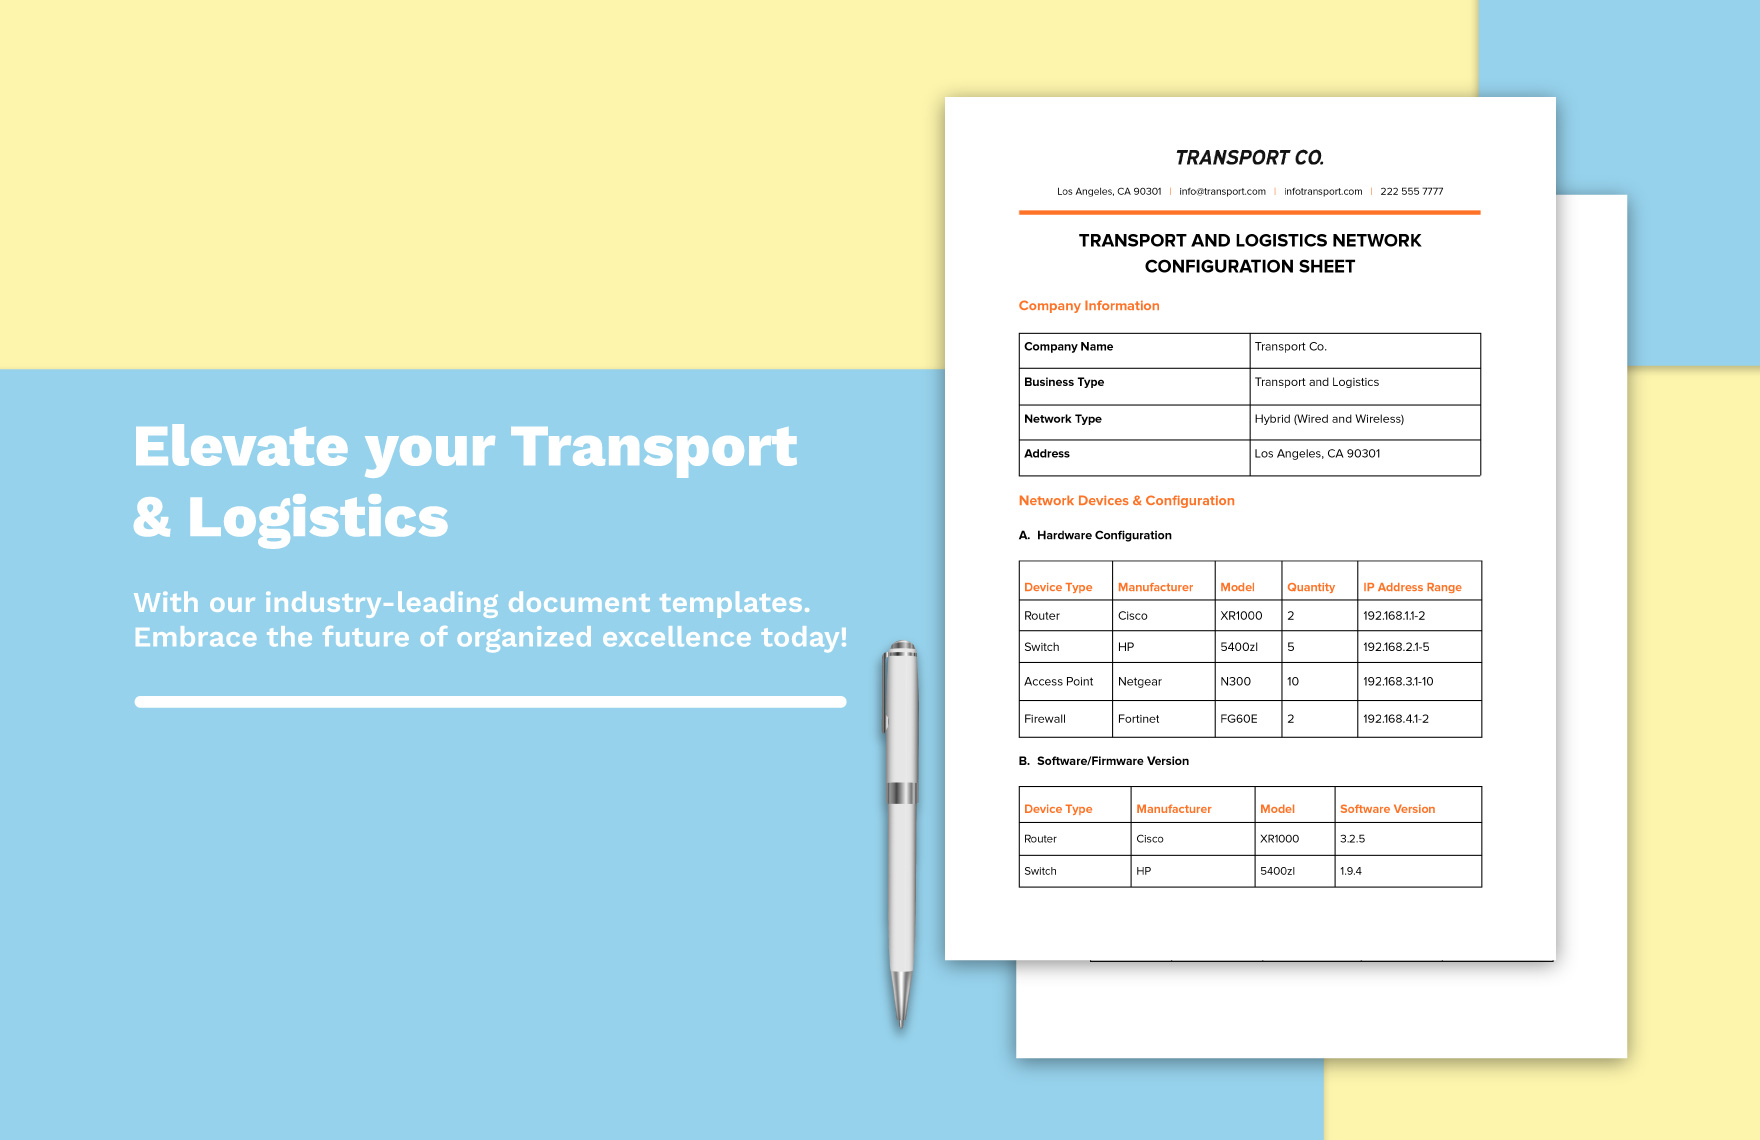 Transport and Logistics Network Configuration Sheet Template